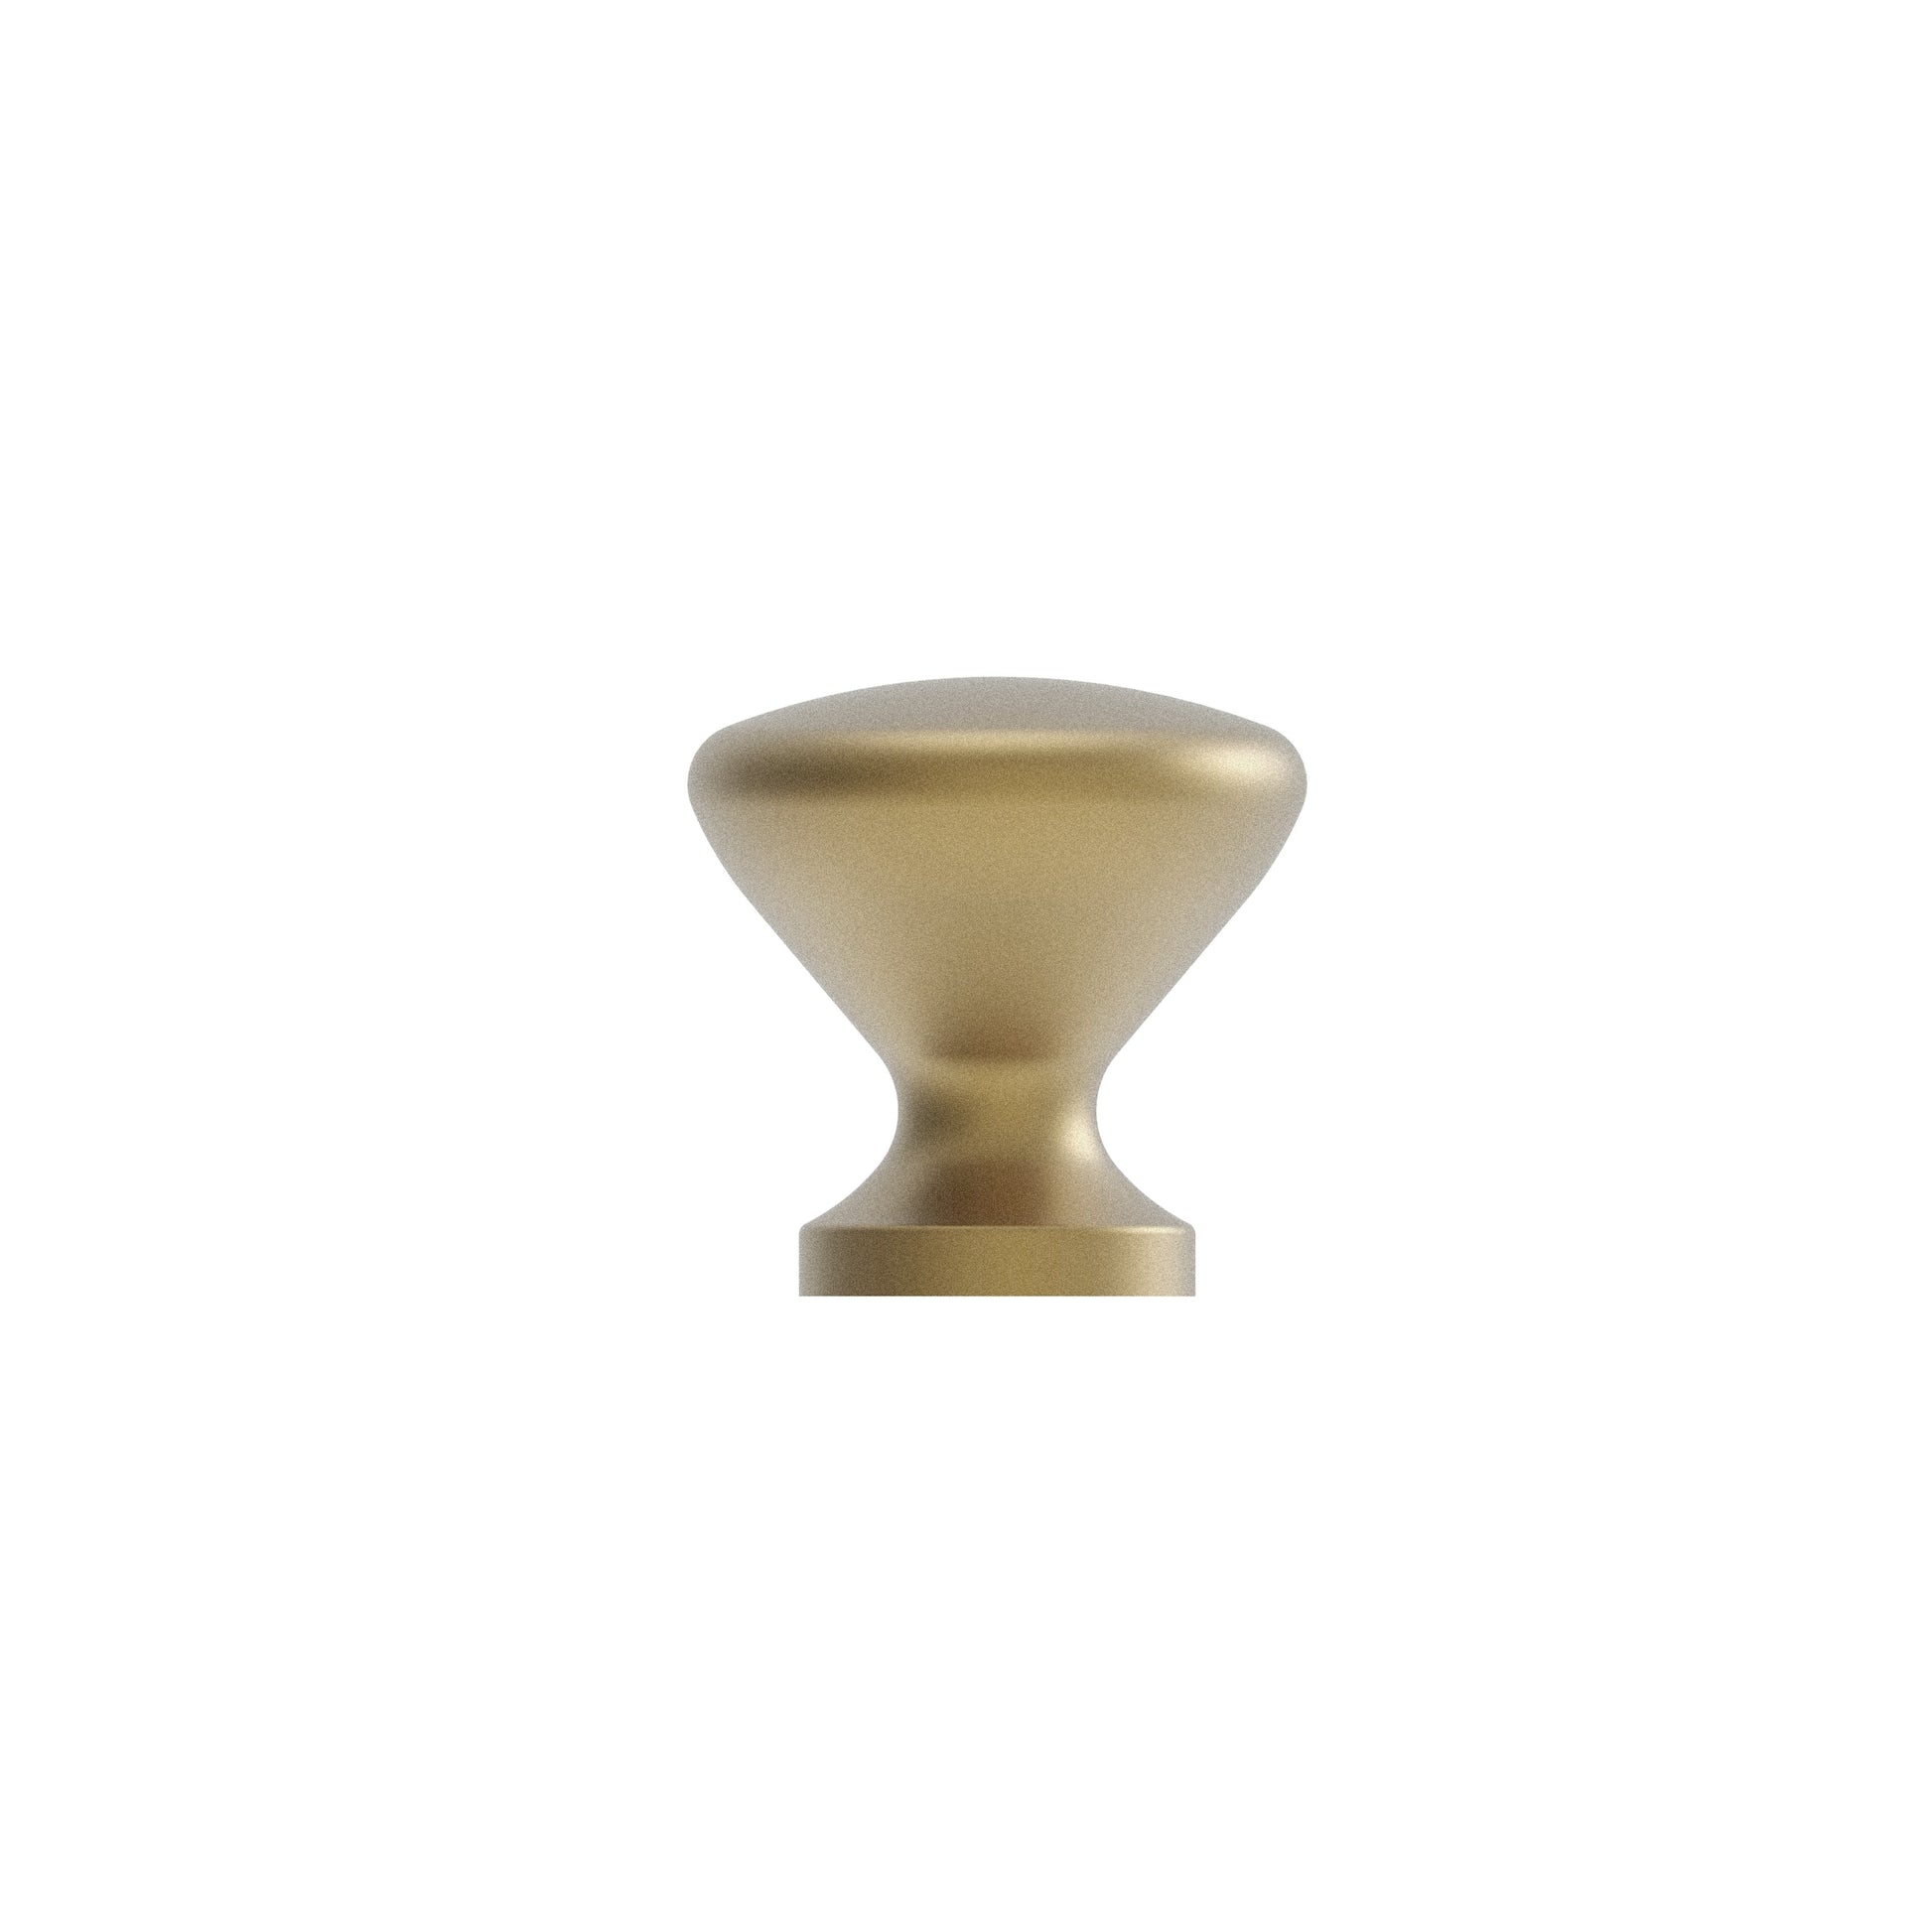 ZEN Design Cup 1" Diameter Champagne Bronze Single Hole Cabinet Knob